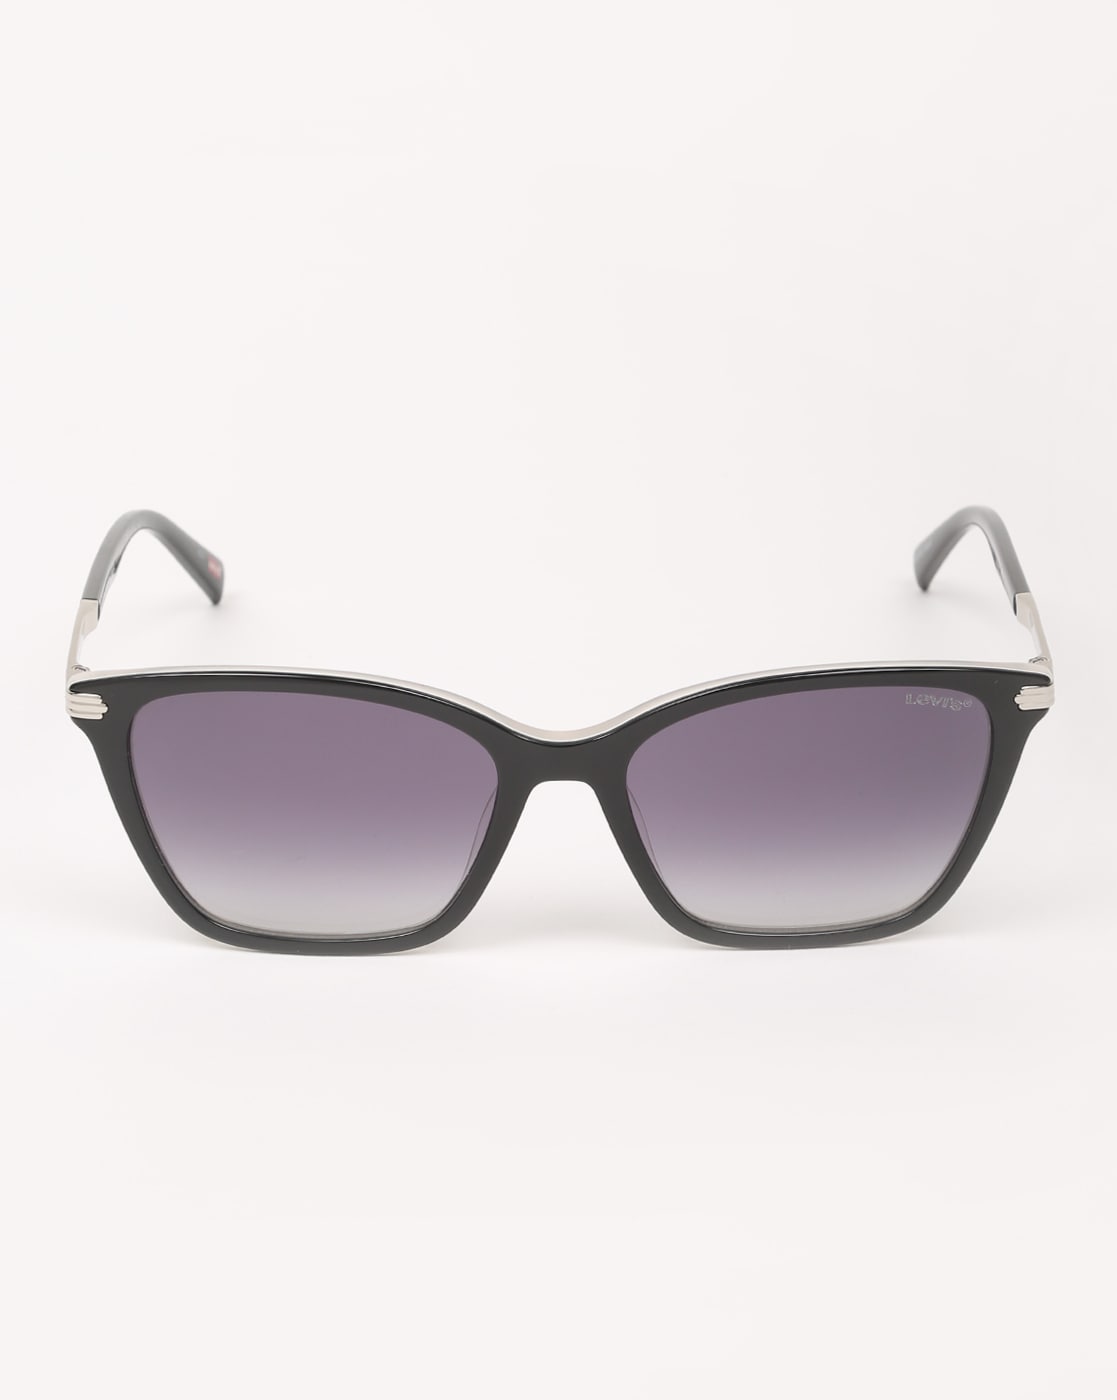 Louis Vuitton, sunglasses, sturdy black plastic frame wi…